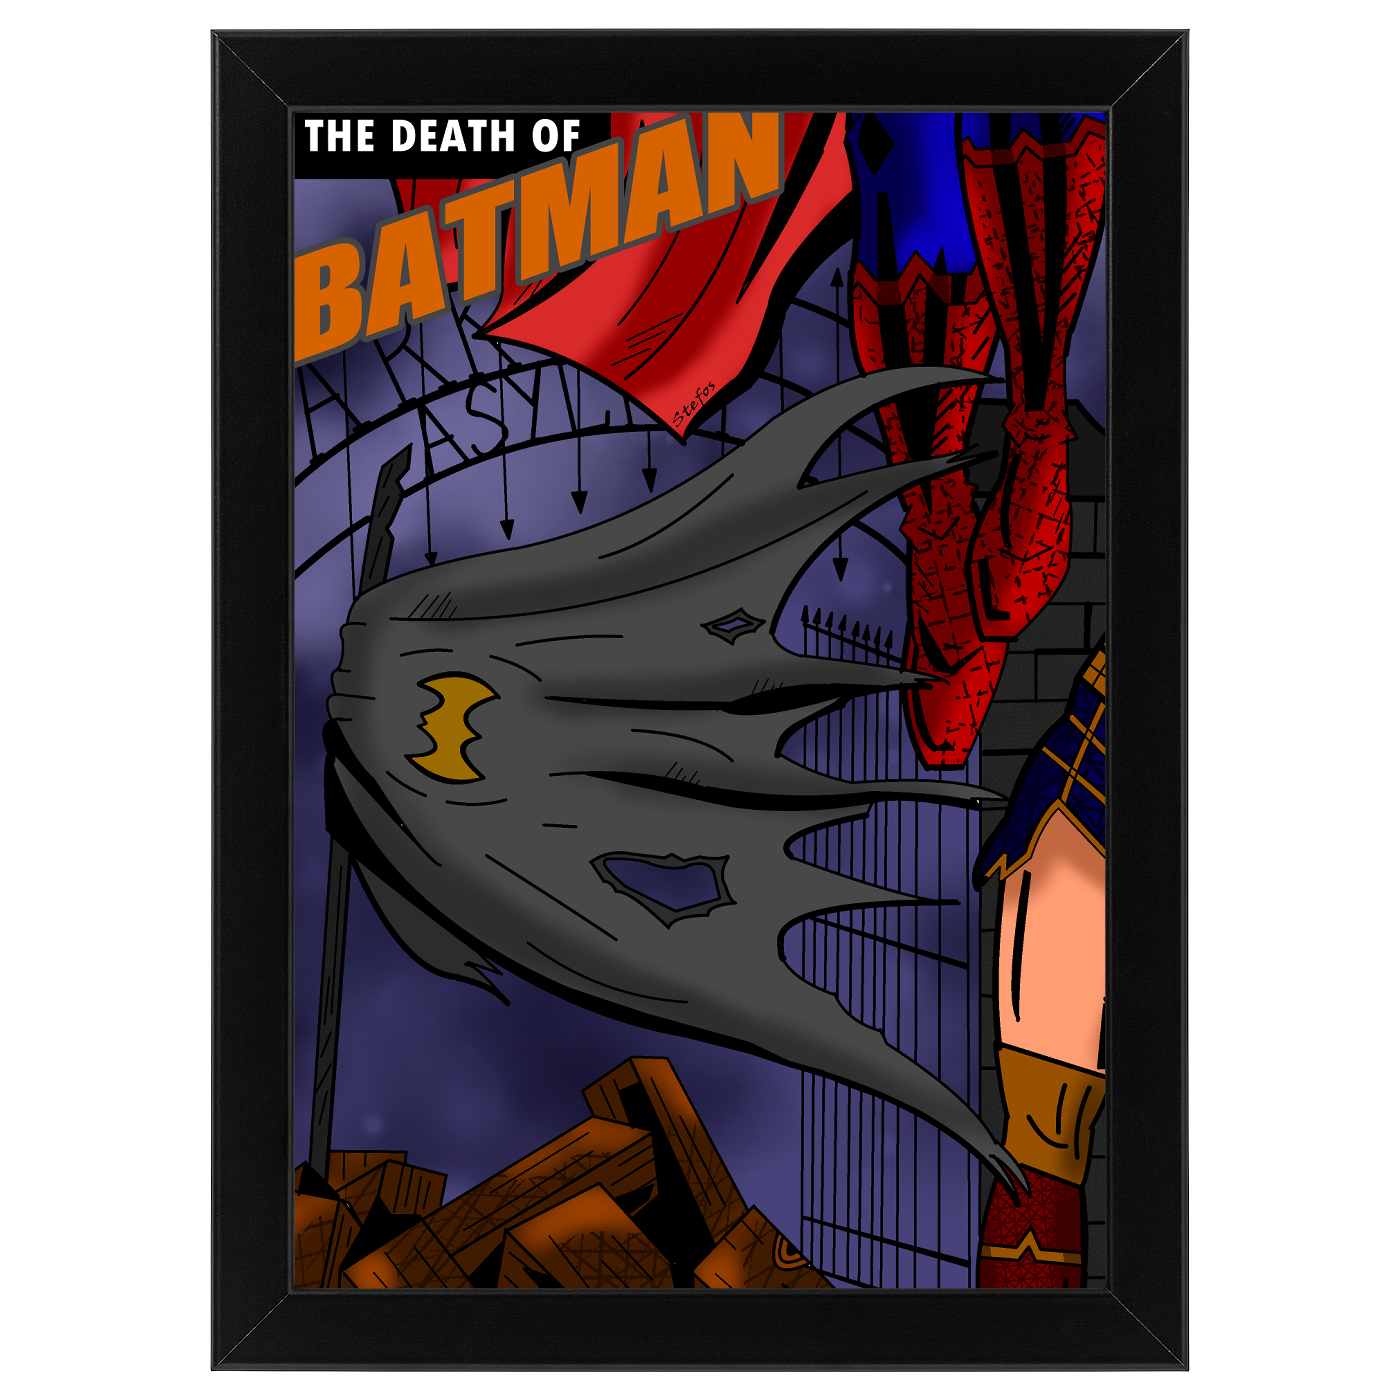 The death of Batman